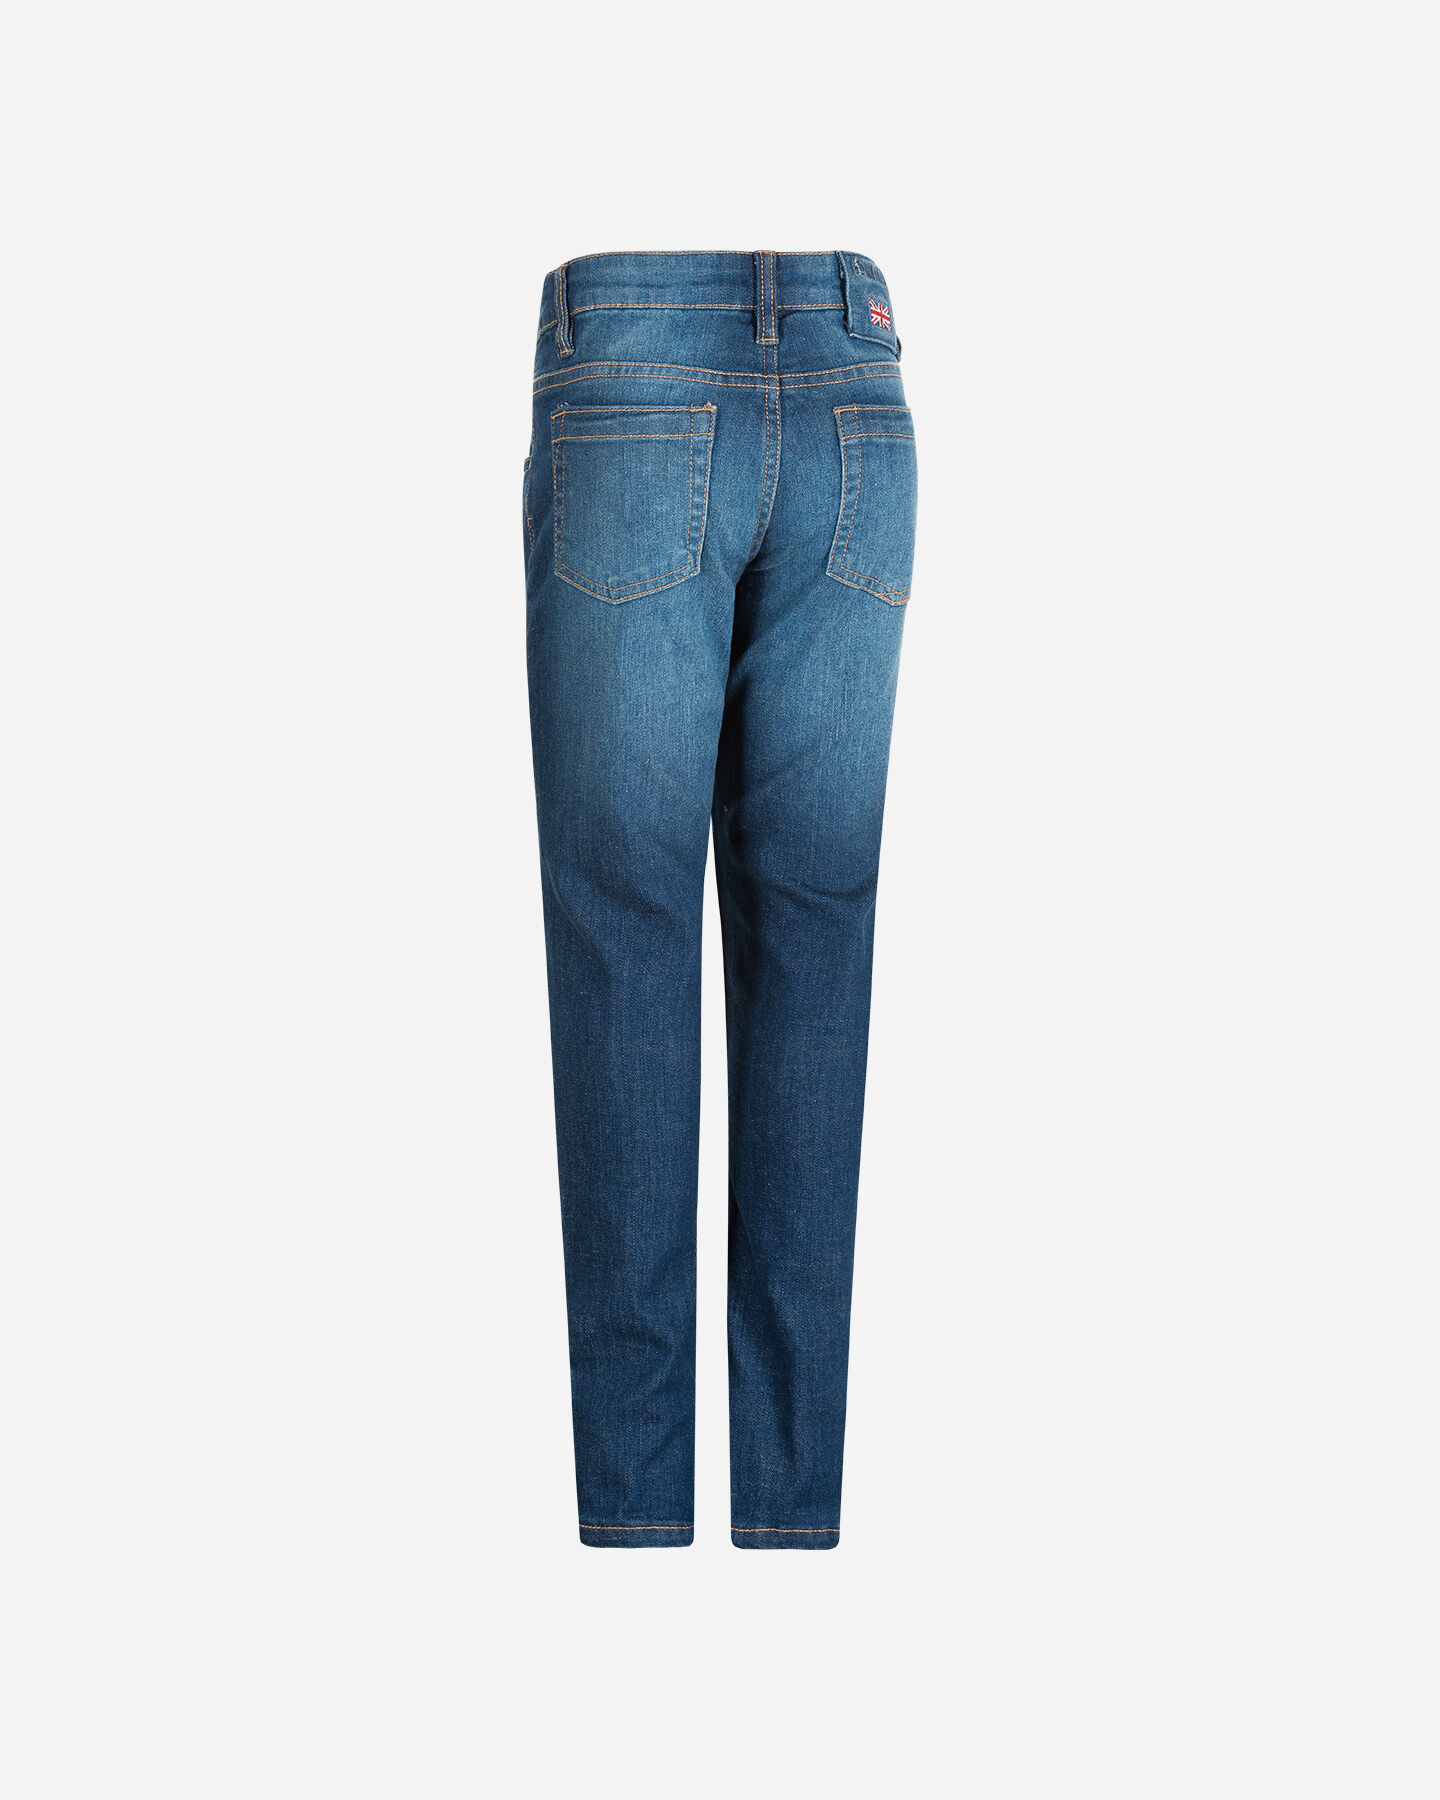  Jeans ADMIRAL CLASSIC JR S4081318|DD|4A scatto 1